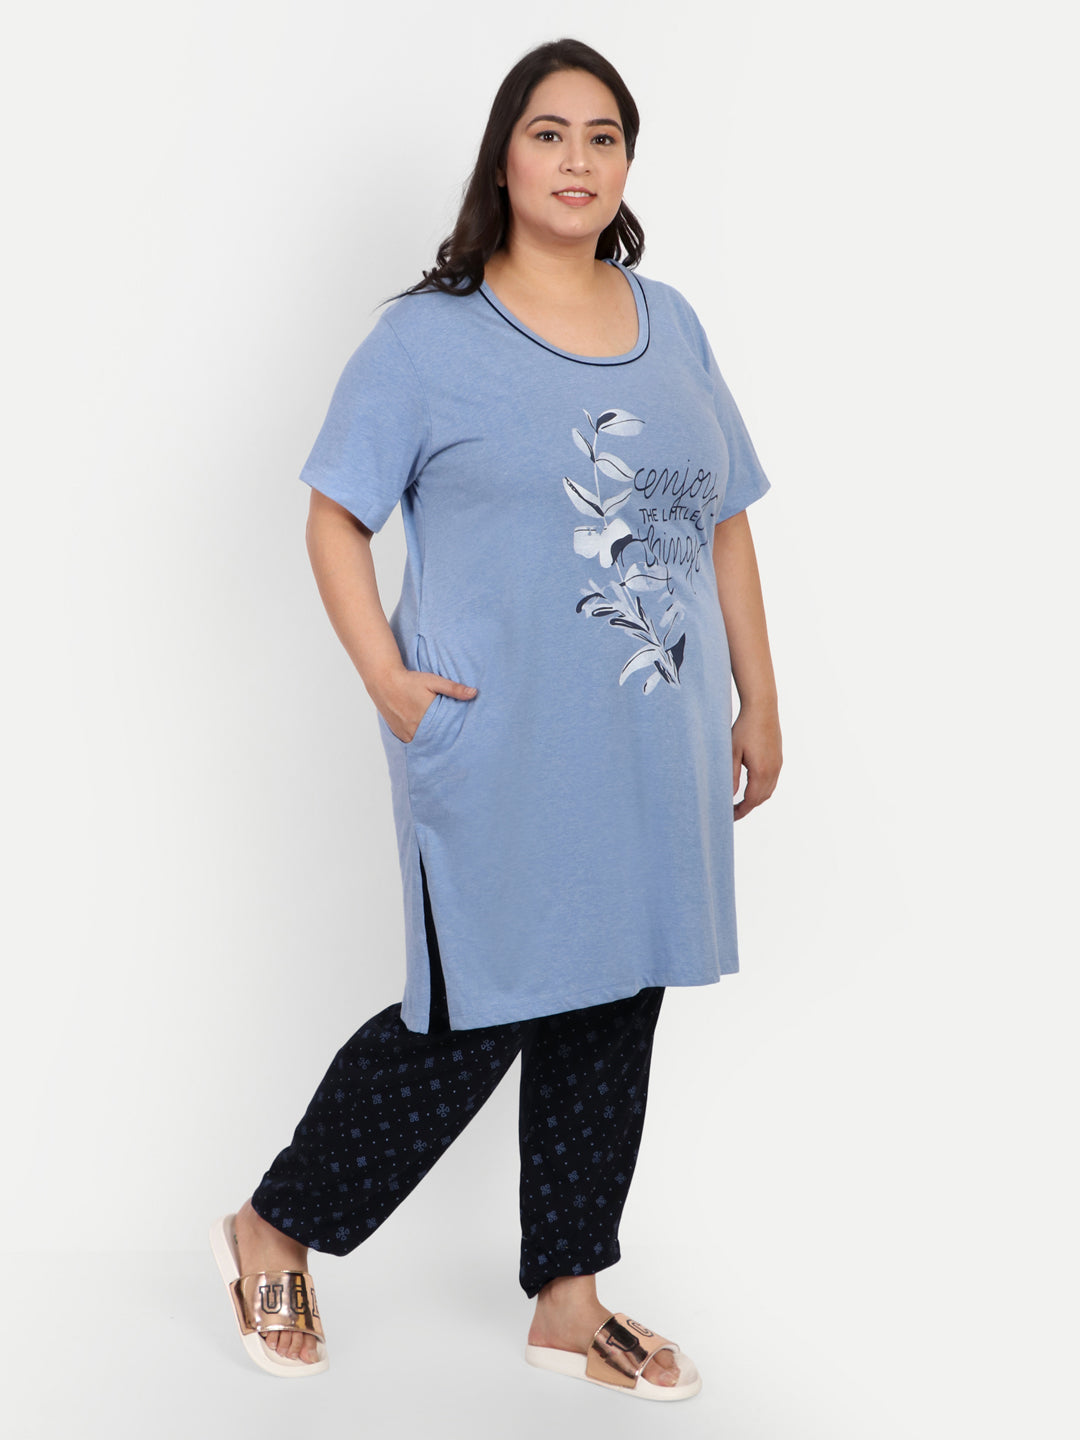 Plus Size Cotton Nightsuit For Women - Long Top & Pyjama Set